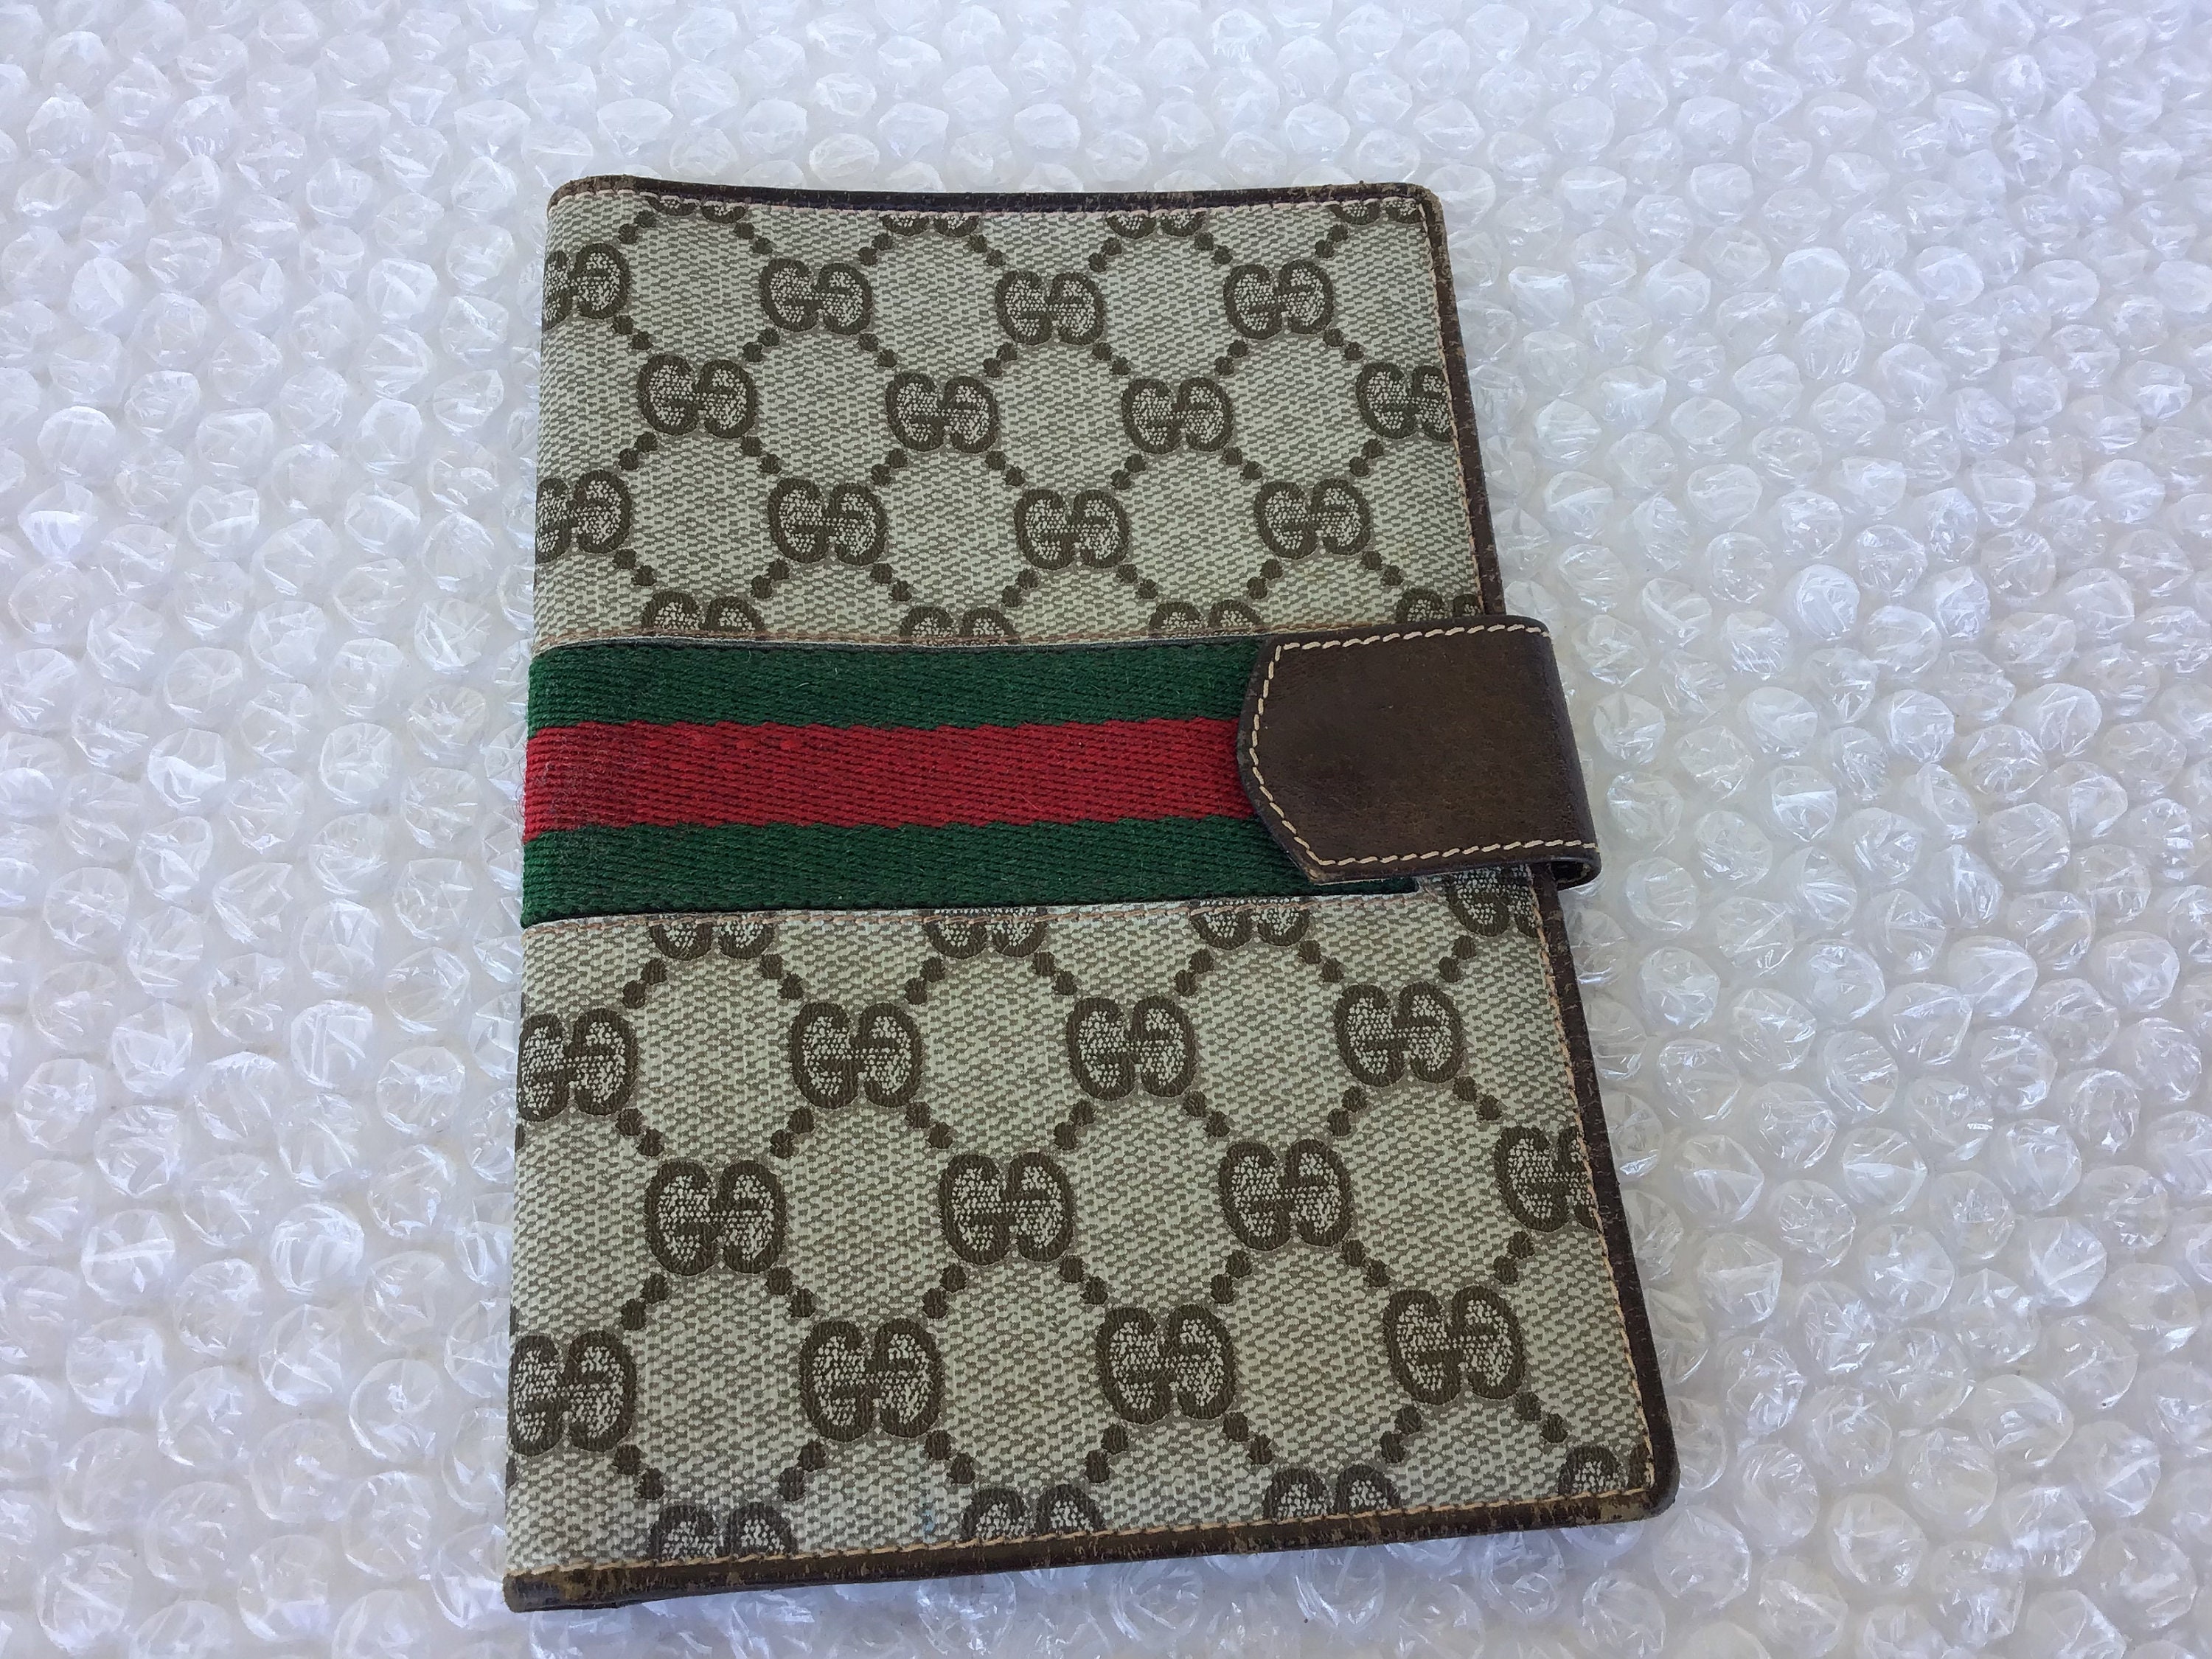 Vintage Gucci Passport Holder or Wallet 